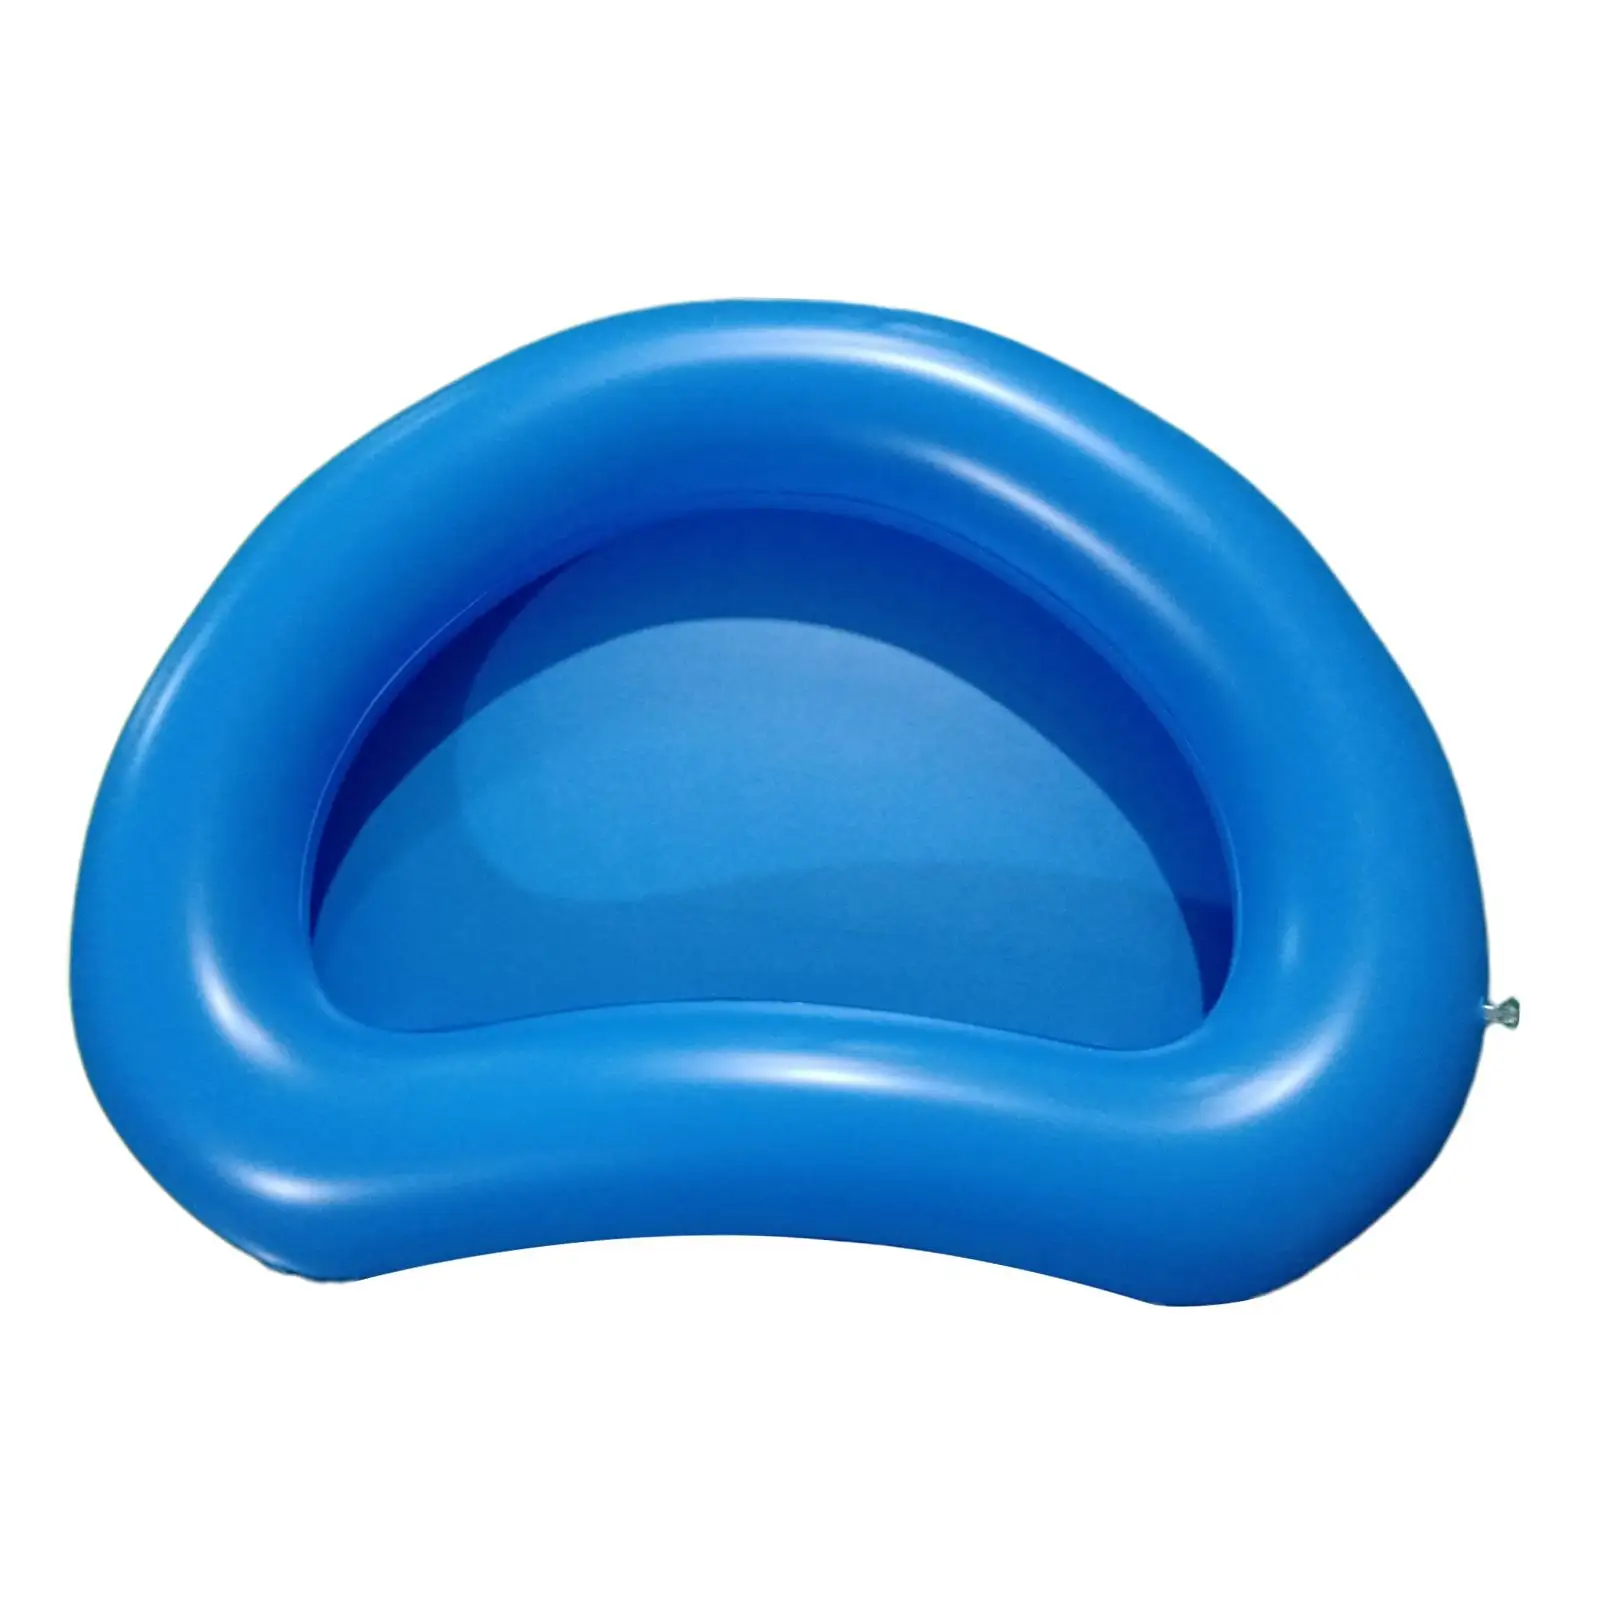 Inflatable Foot Bath Footbath Foot Soaking Bath Basin Anit Slip Accessories for Rinsing Feet before Entering Pool Blue Portable